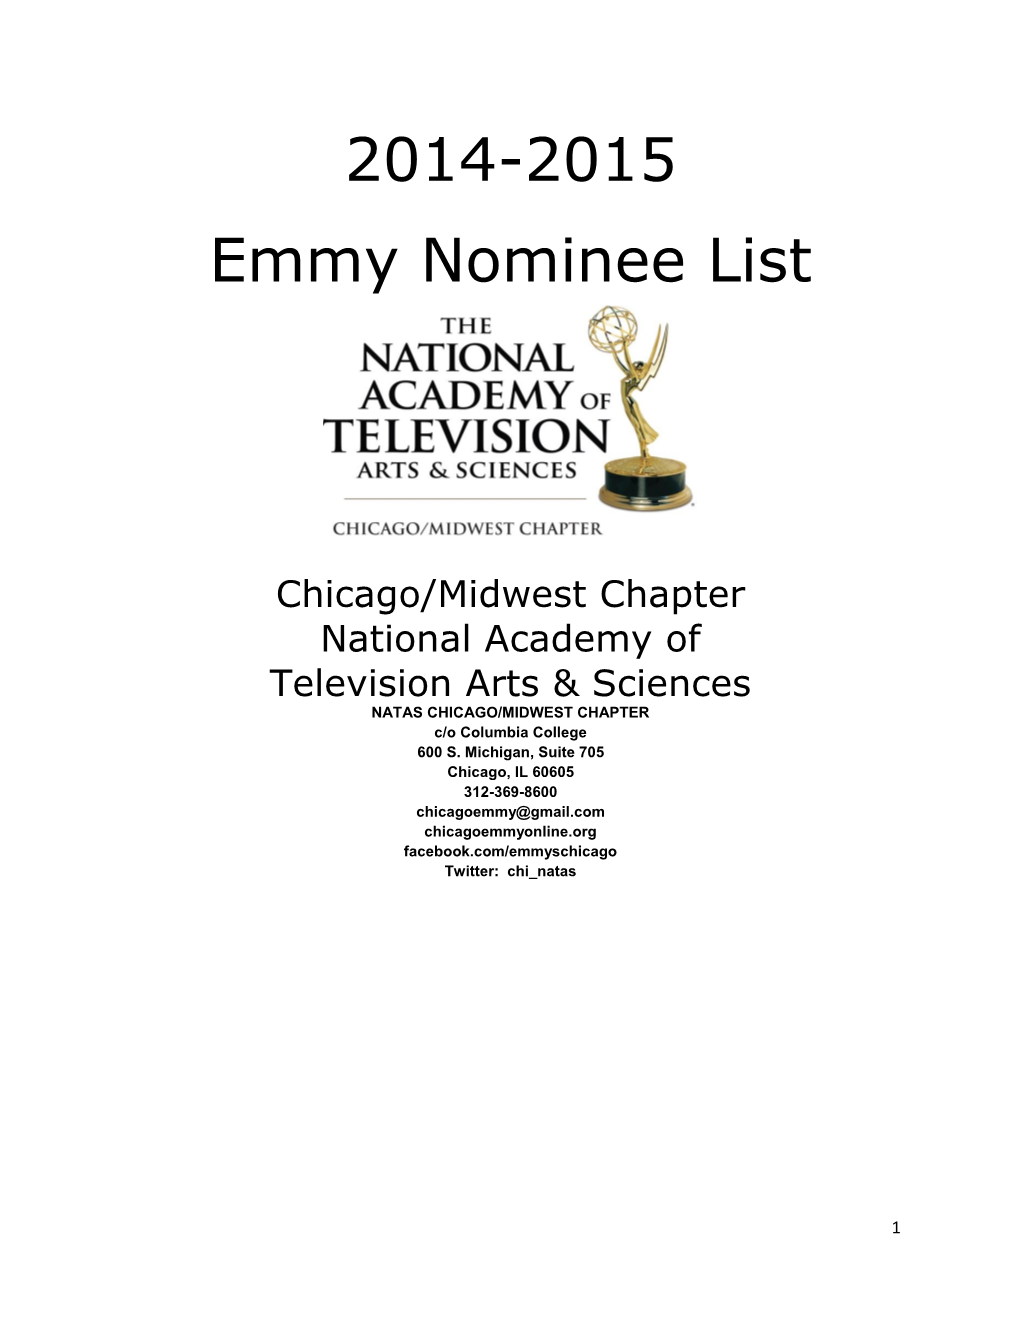 2014-2015 Emmy Nominee List